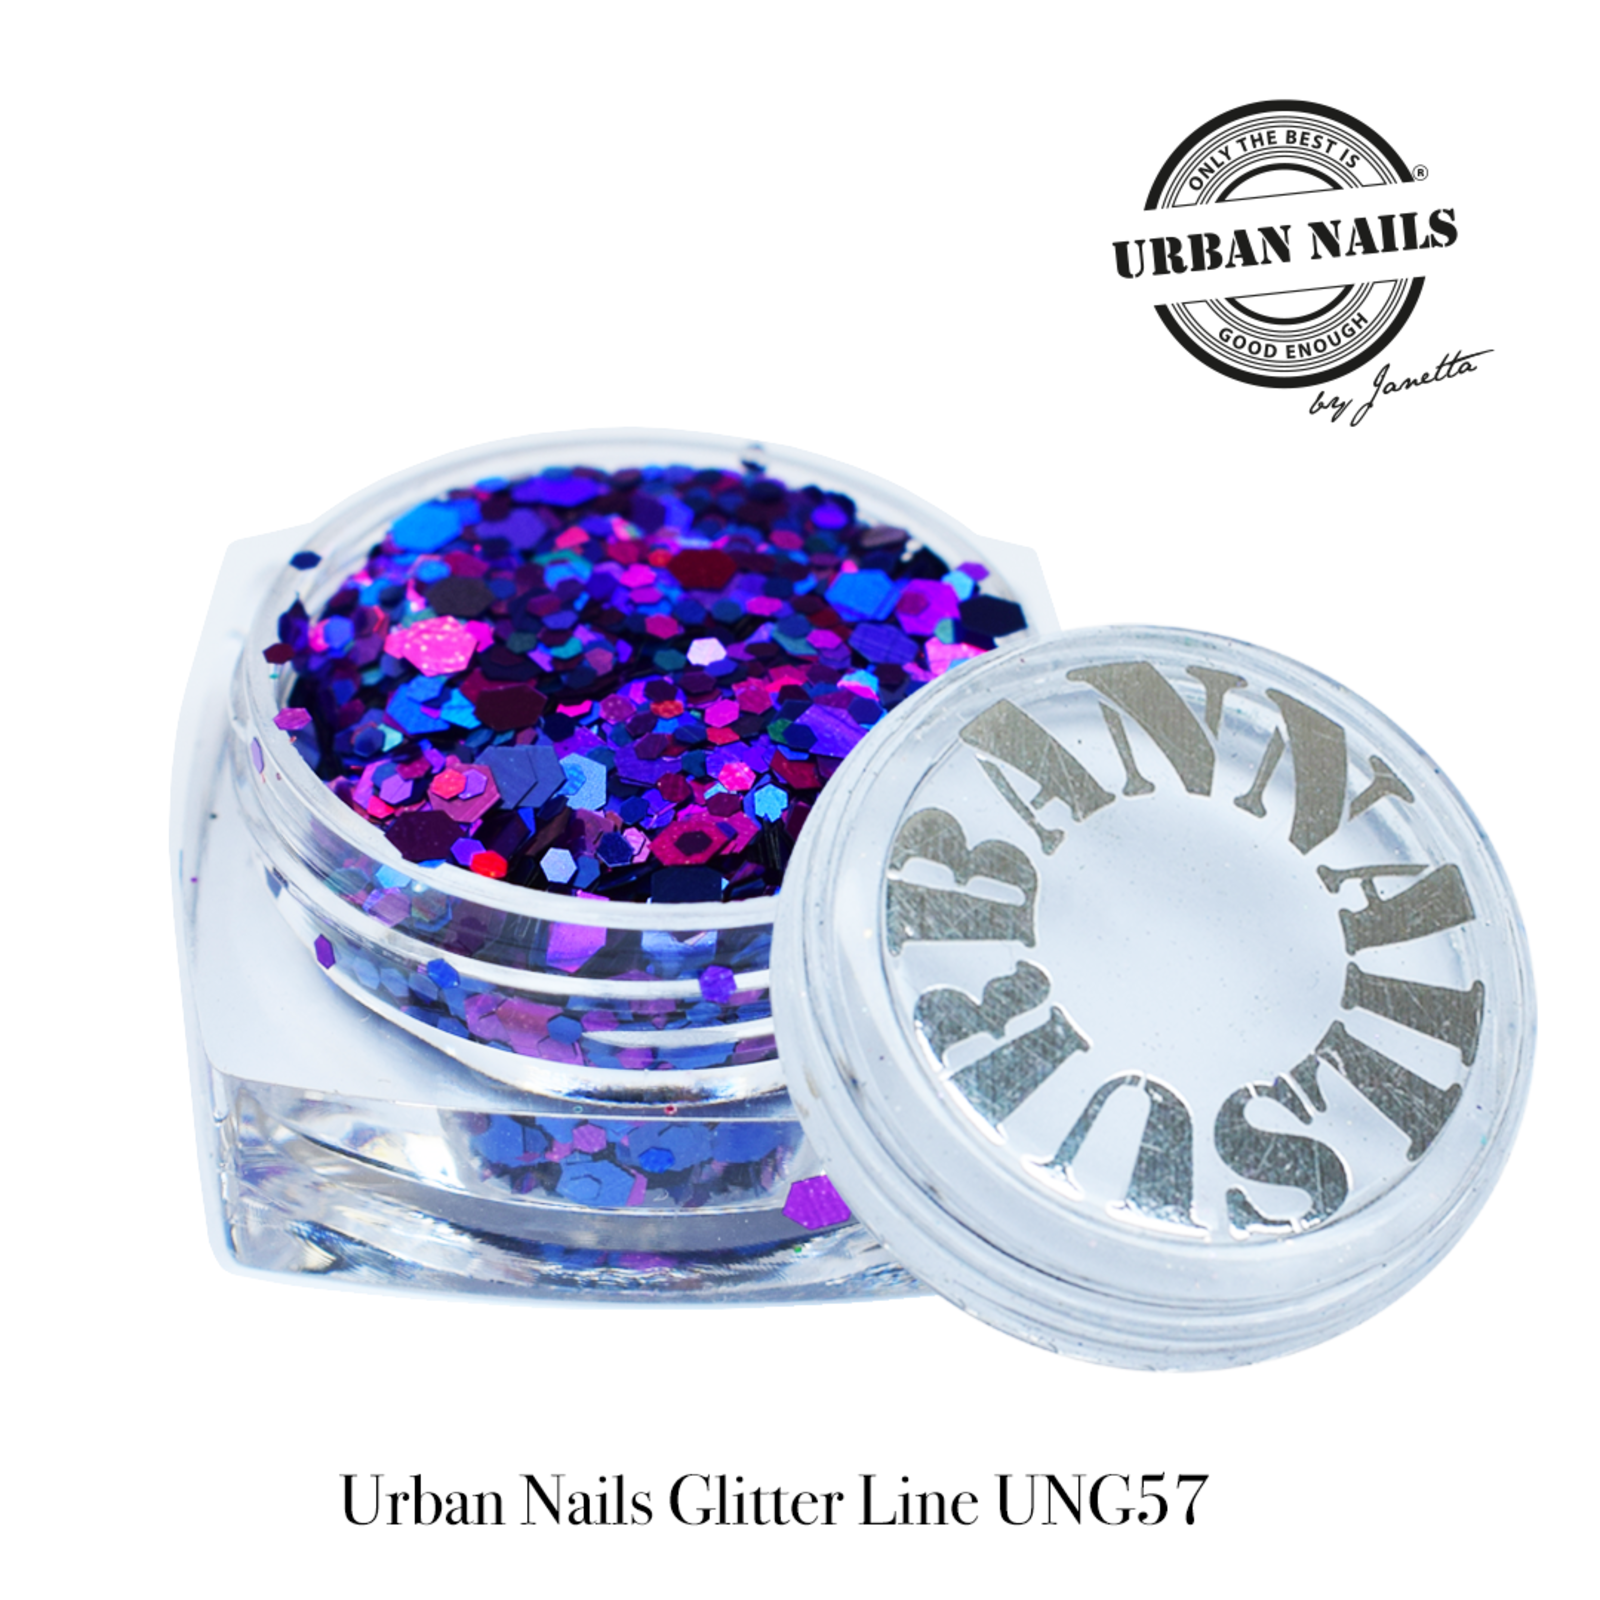 Urban nails Glitter Line UNG57